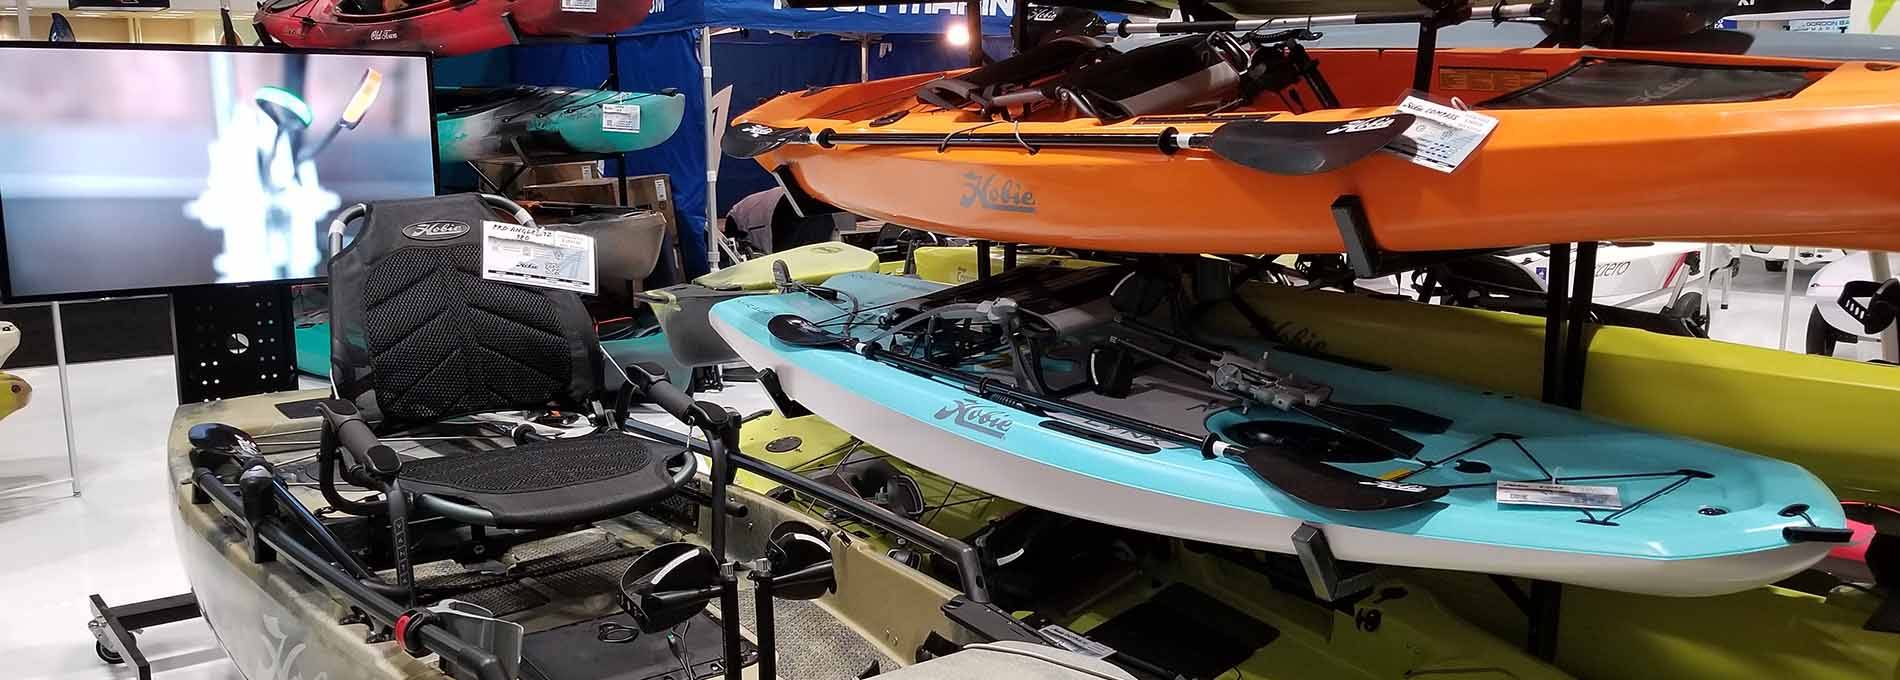 Fogh Marine kayak, kayak fishing and sailboat sales in Toronto, Ontario -  Fogh Marine Store